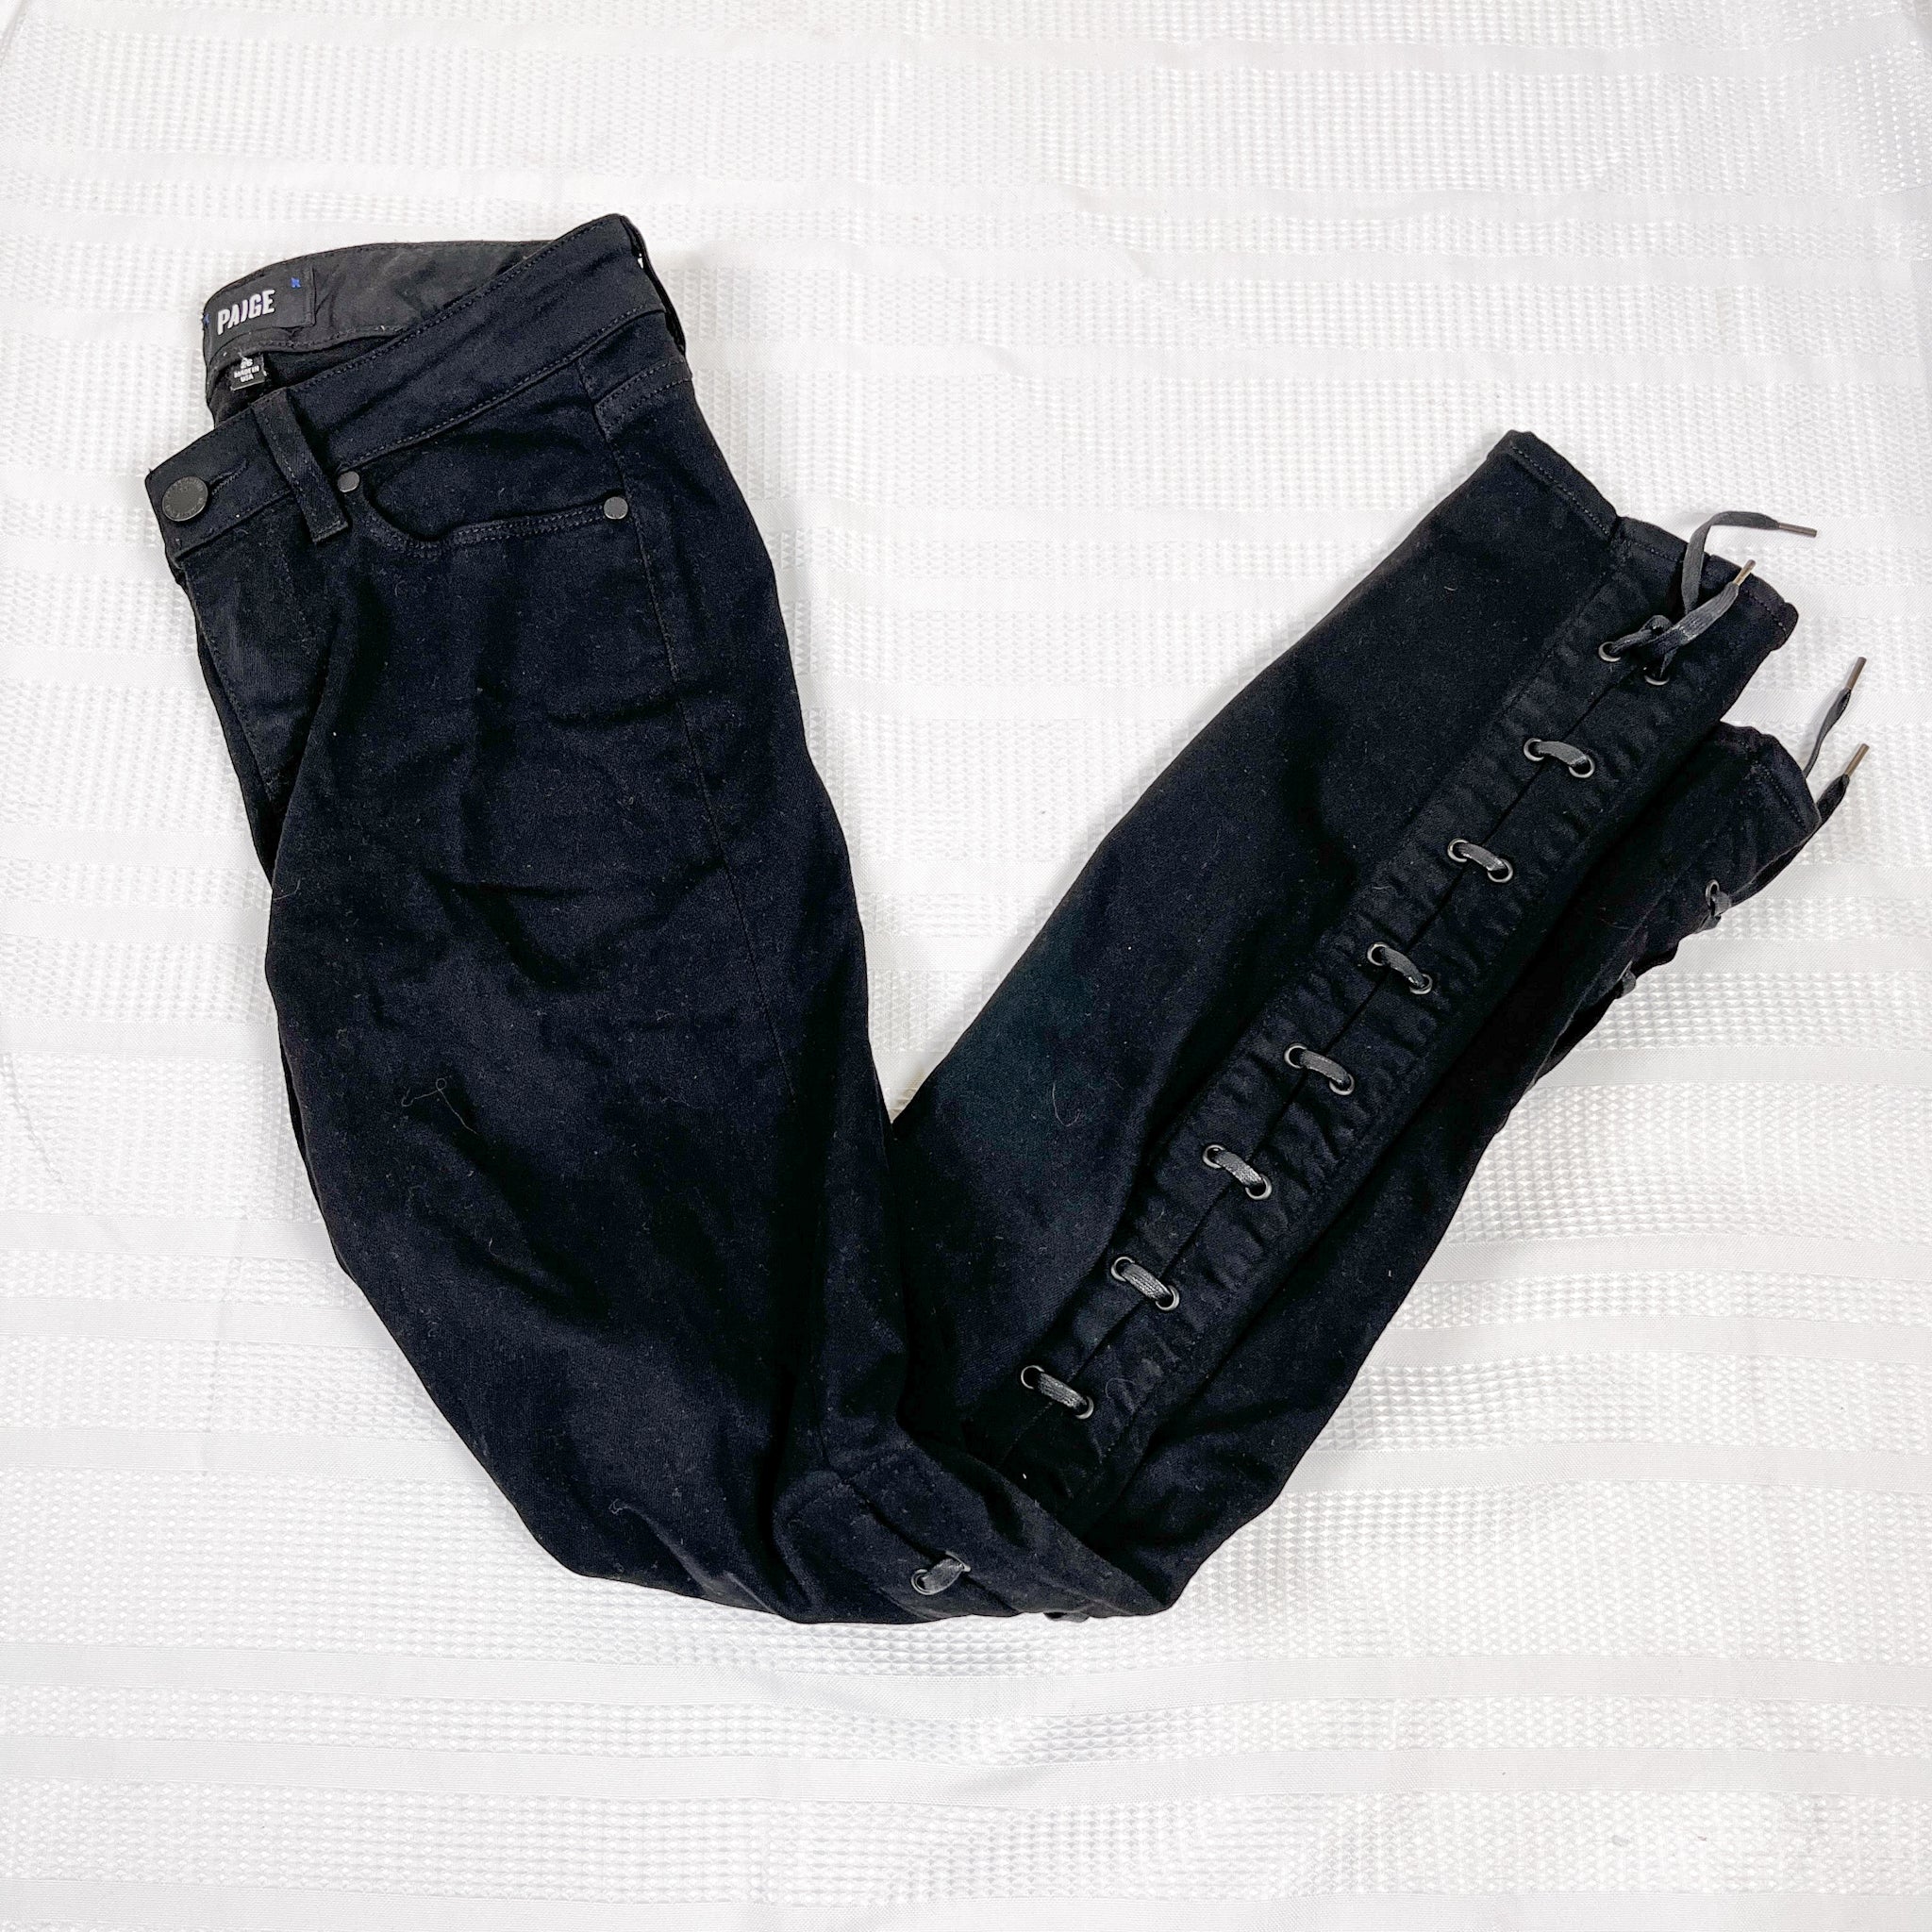 Paige Black Lace Up Jeans – Double Take